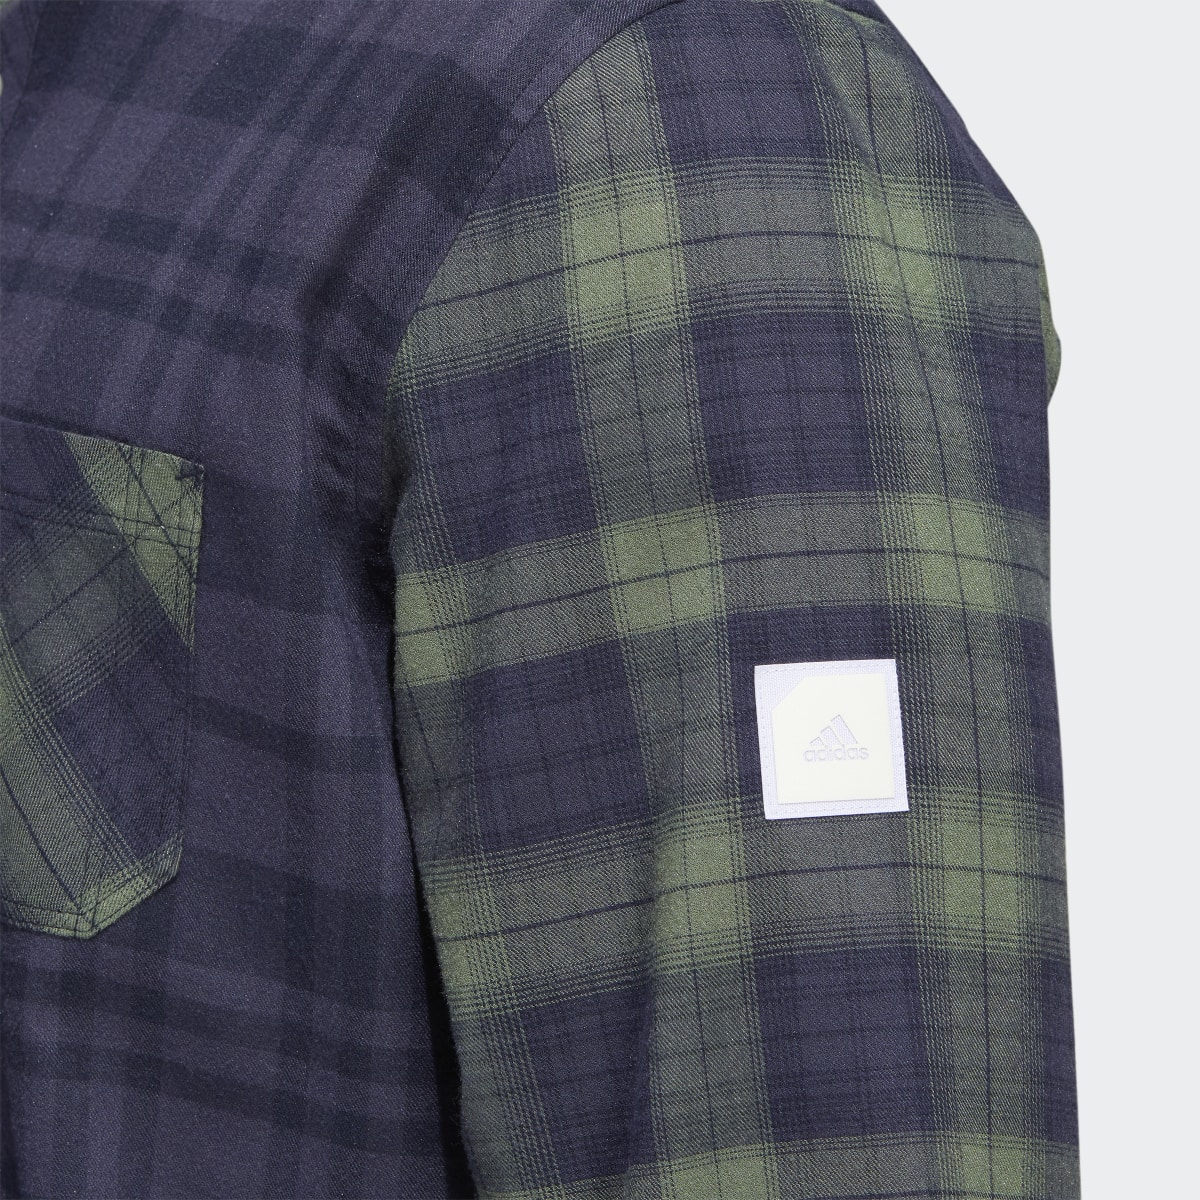 Adidas Adicross Flannel Long Sleeve Shirt. 8